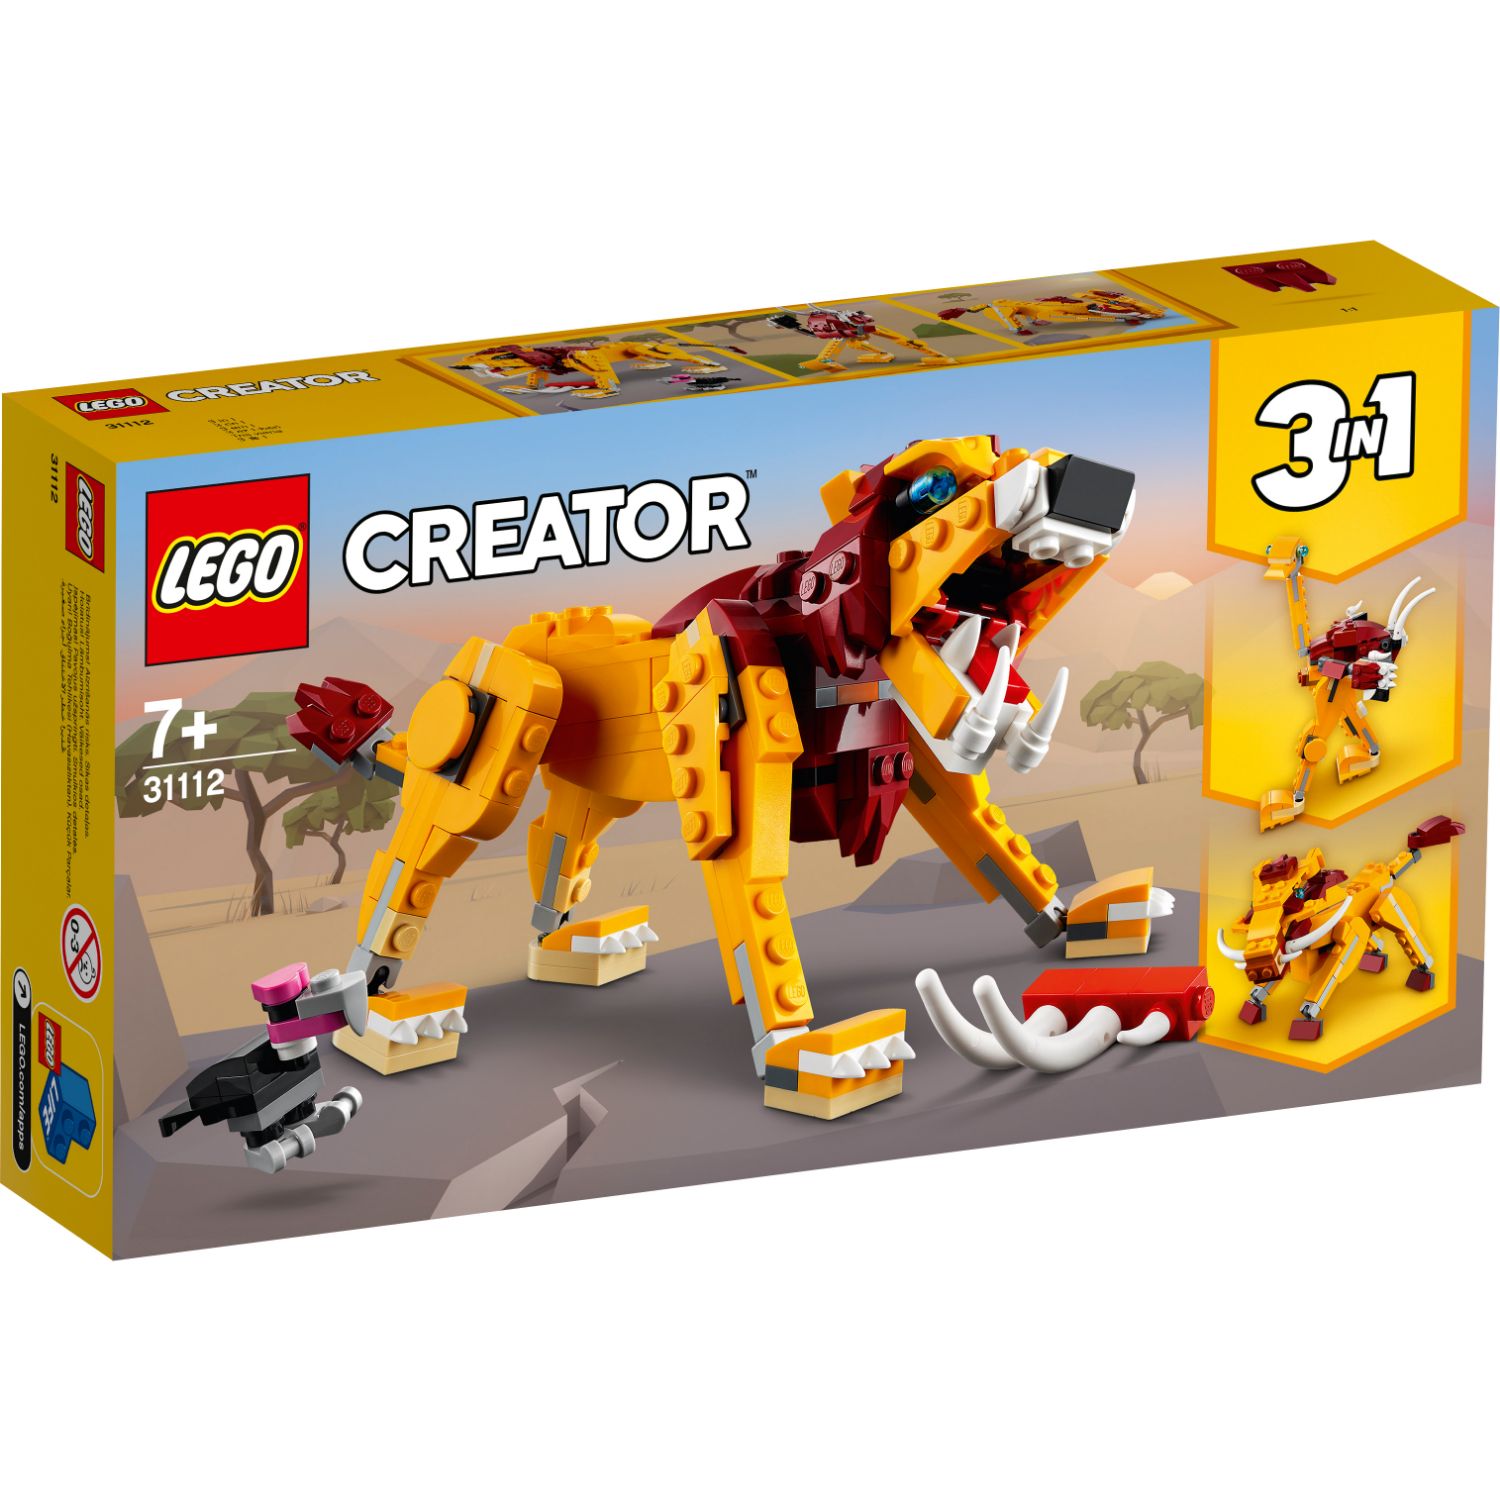 LEGO CREATOR 31112 WILDE LEEUW 3IN1